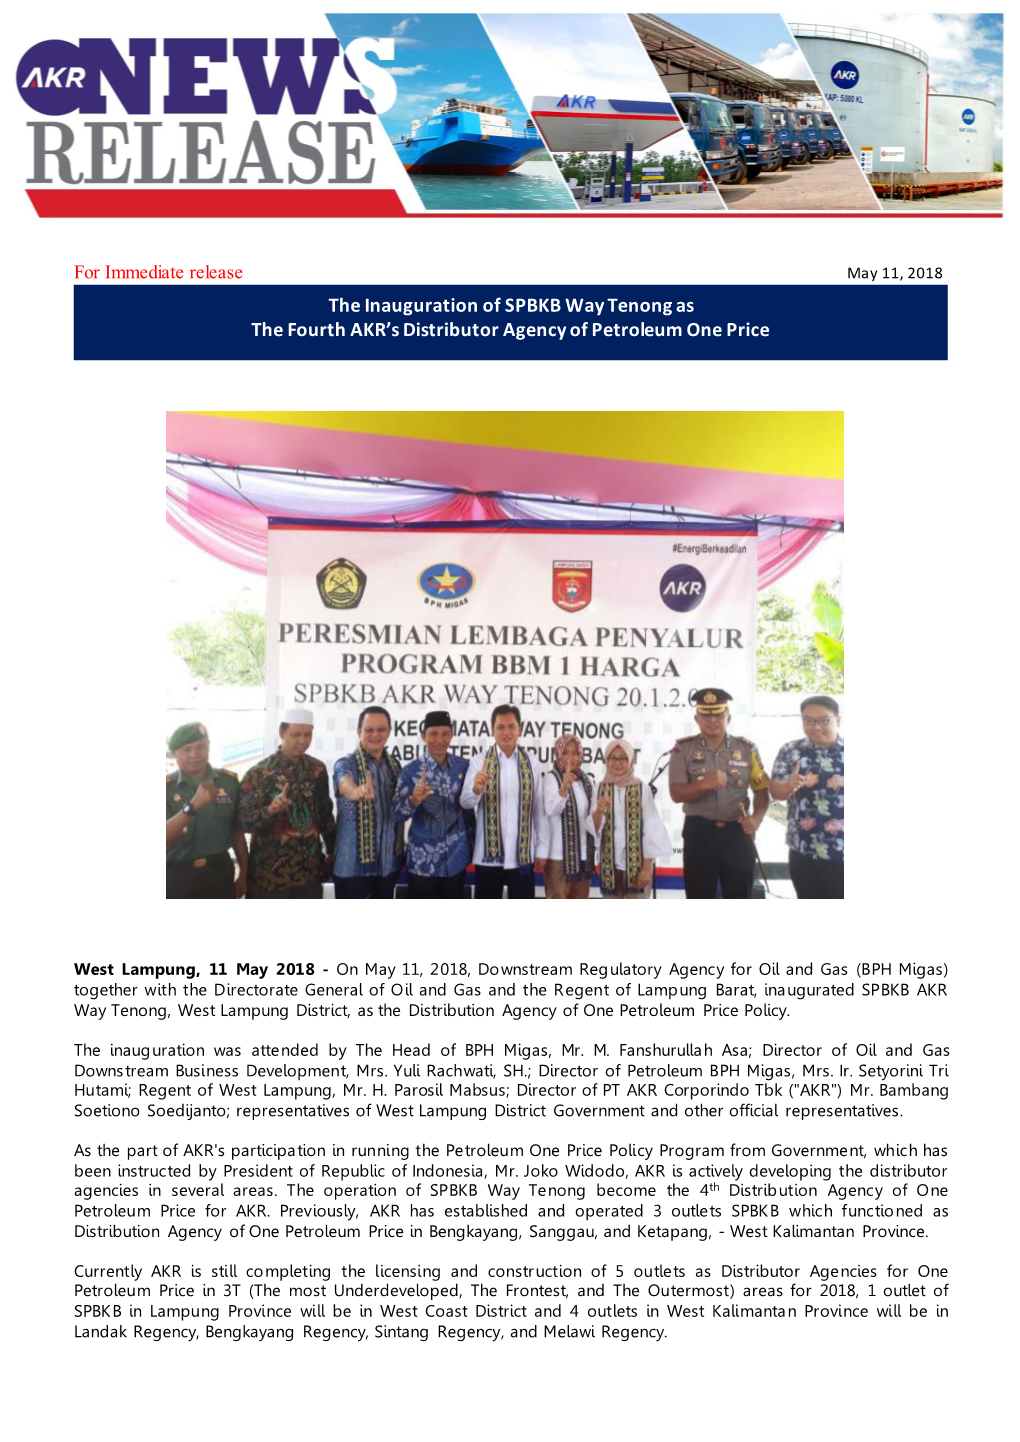 The Inauguration of SPBKB Way Tenong As the Fourth AKR's